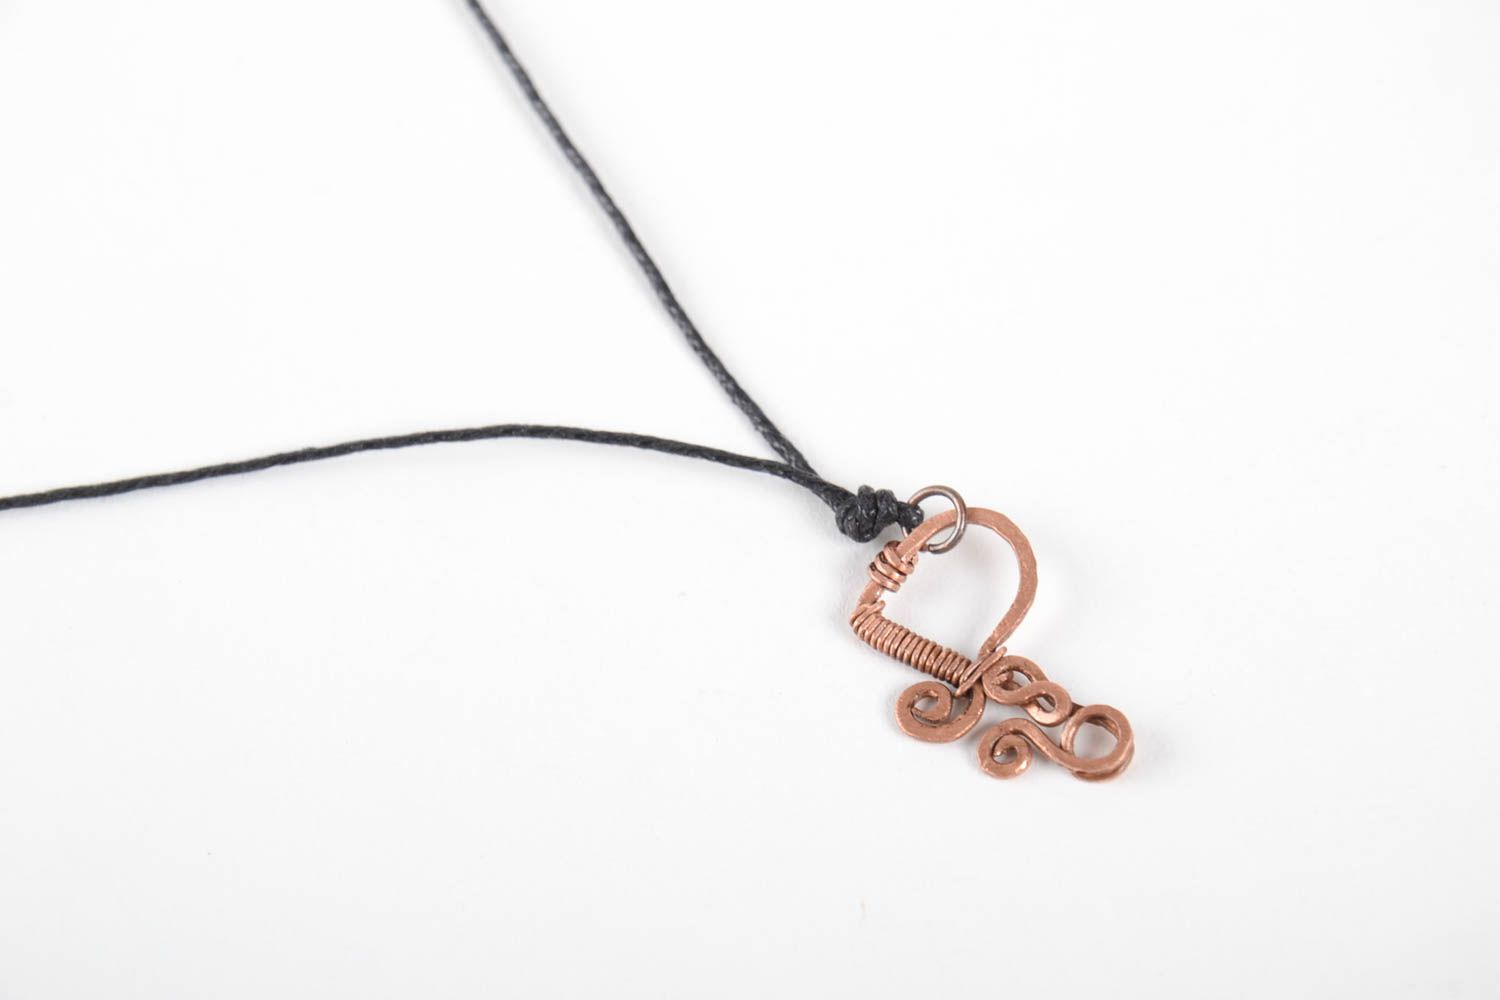 Handmade copper pendant copper jewelry wire wrap accessories for girls photo 3